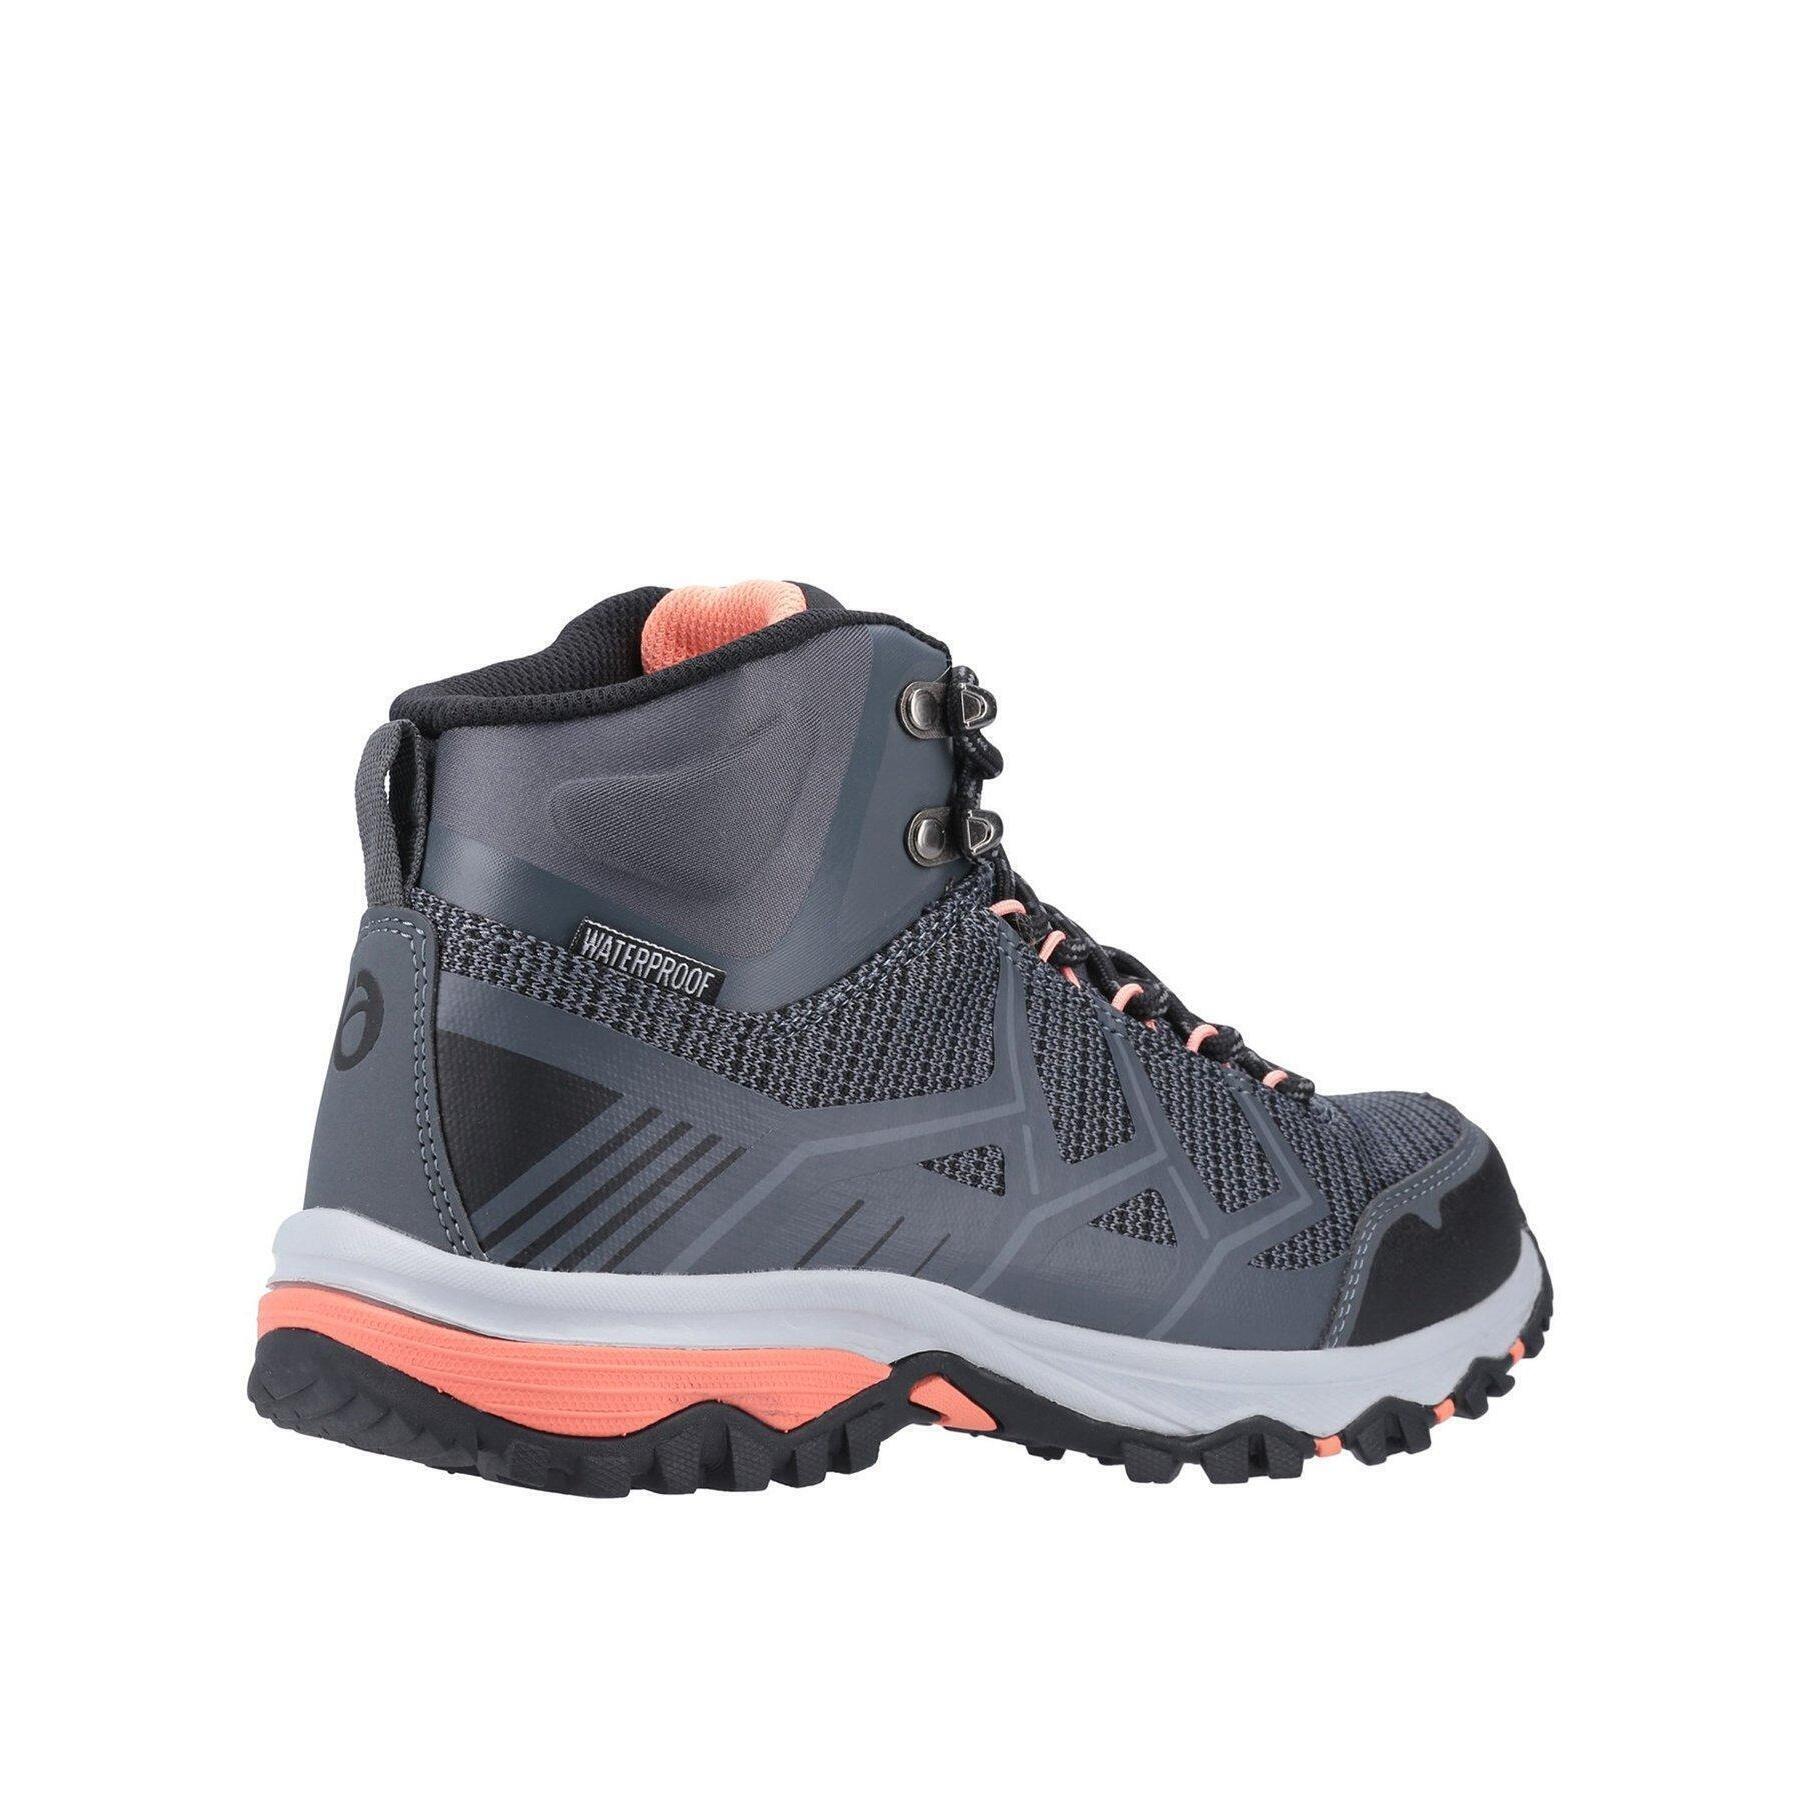 Womens/Ladies Wychwood Hiking Boots (Grey/Coral) 2/5